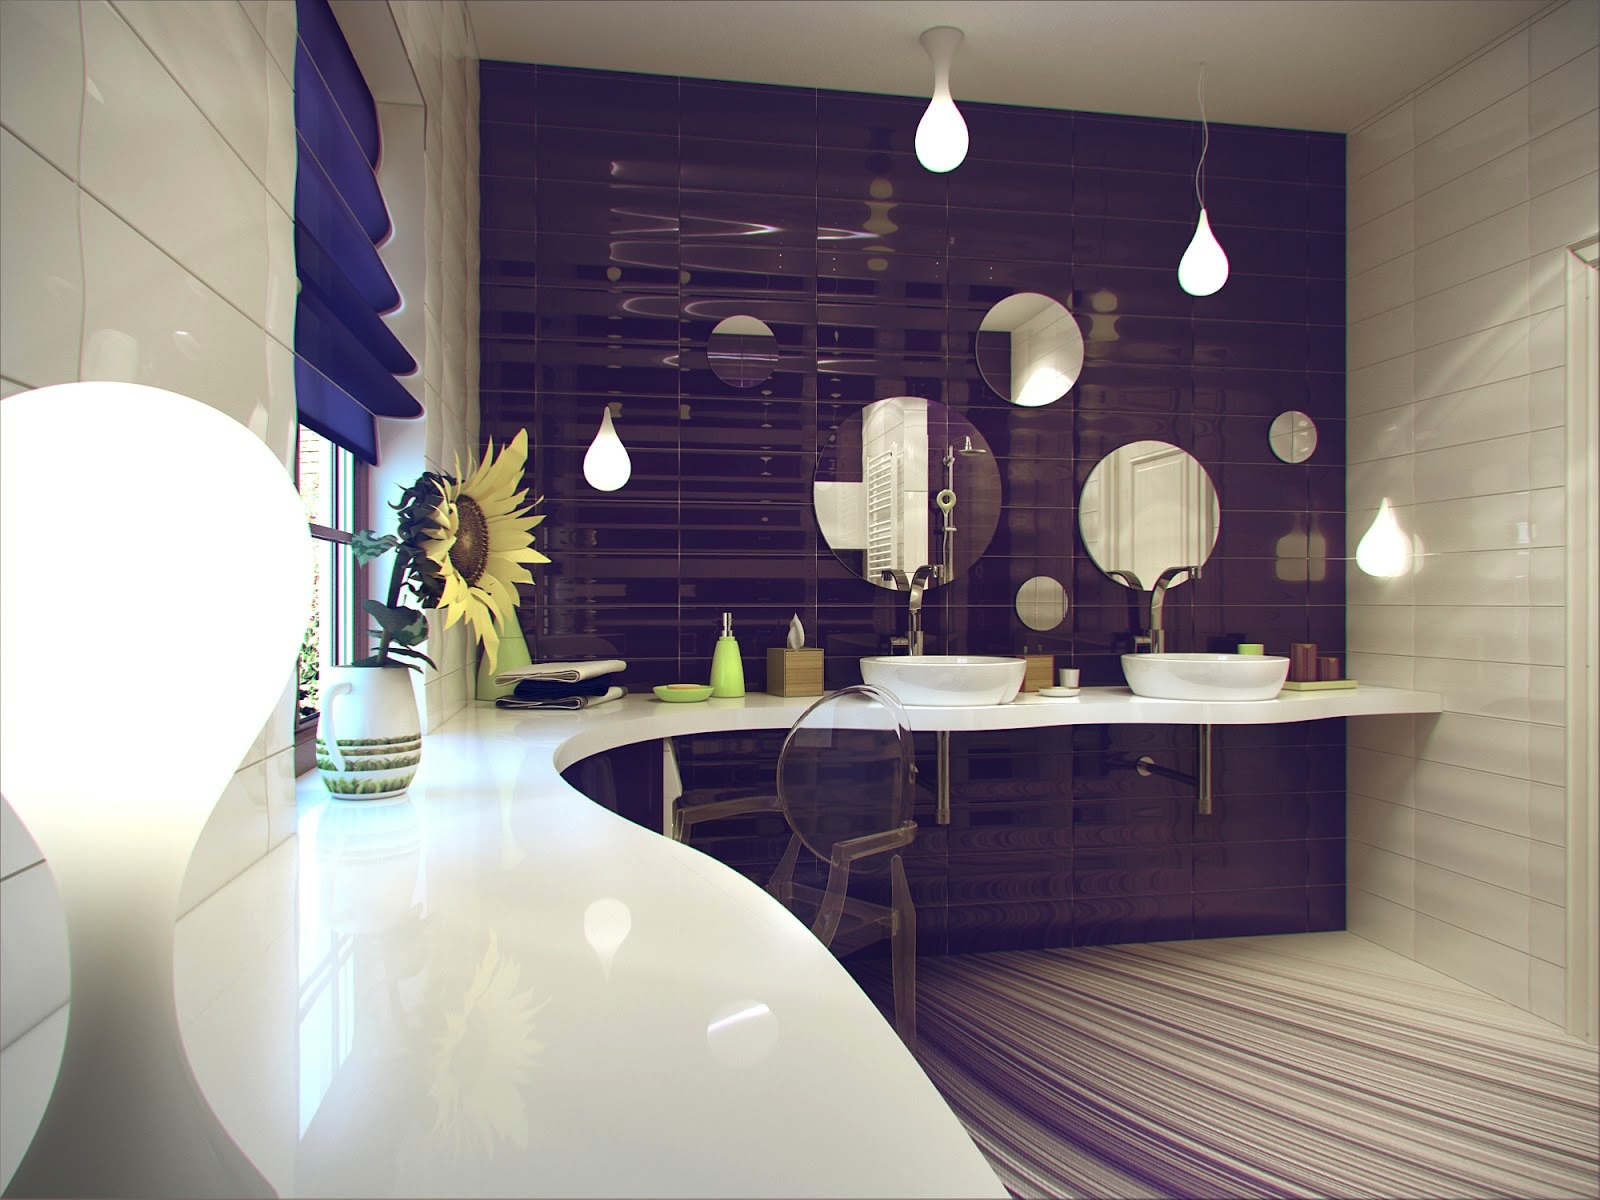 25+ Cool Bathrooms Ideas, Designs | Design Trends ...